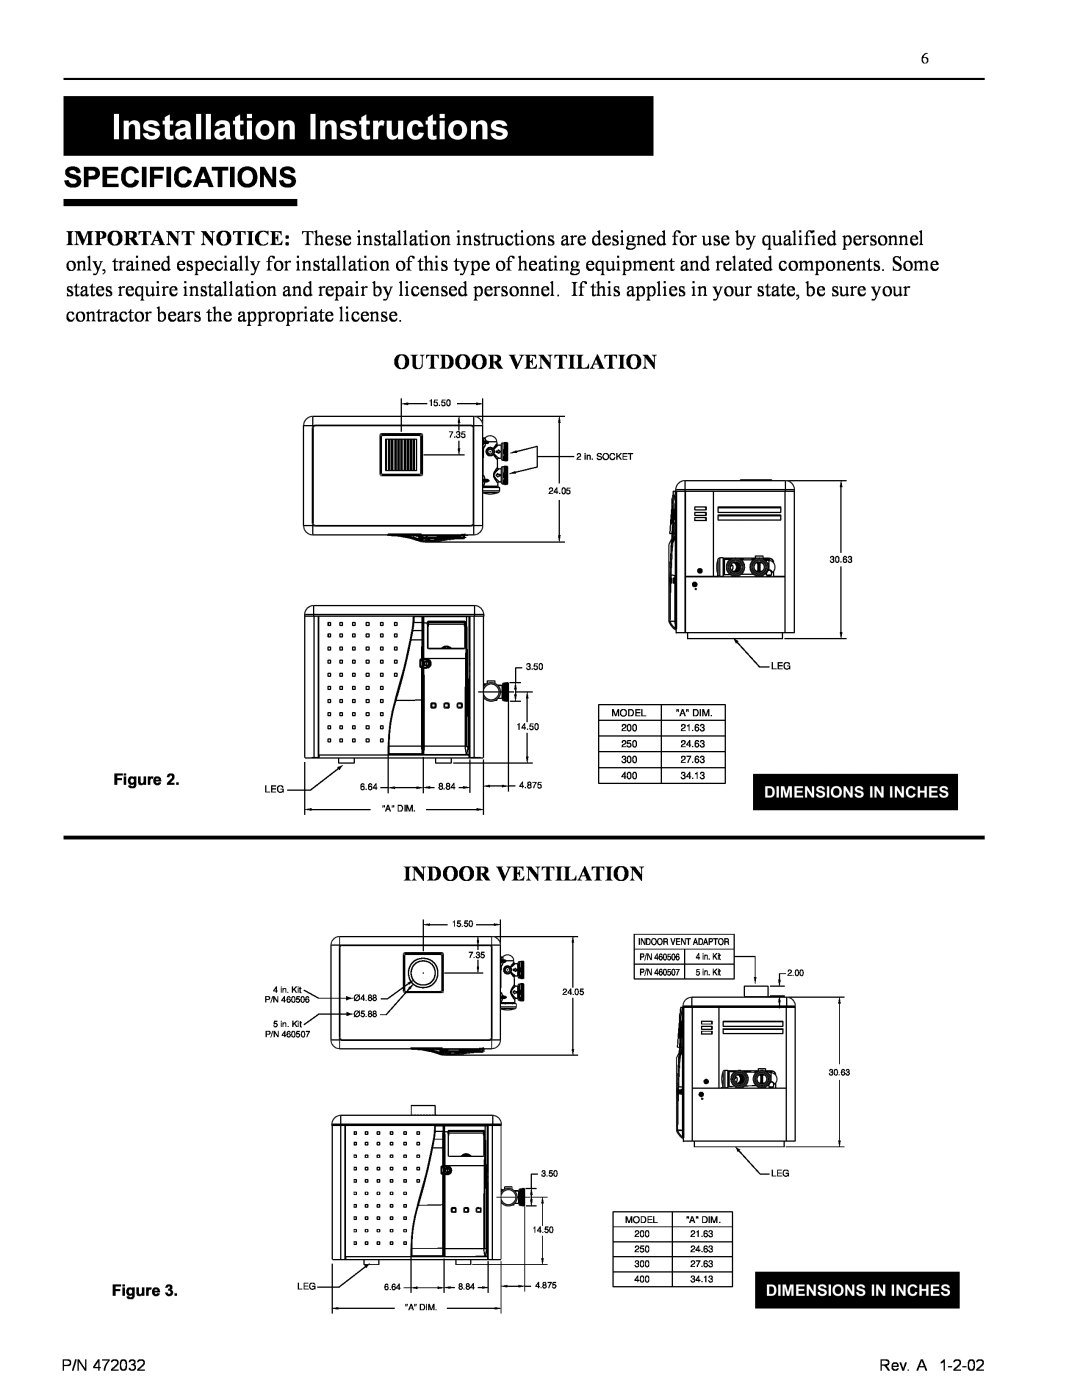 Pentair NT Standard Series Installation Instructions, Specifications, Outdoor Ventilation, Indoor Ventilation 